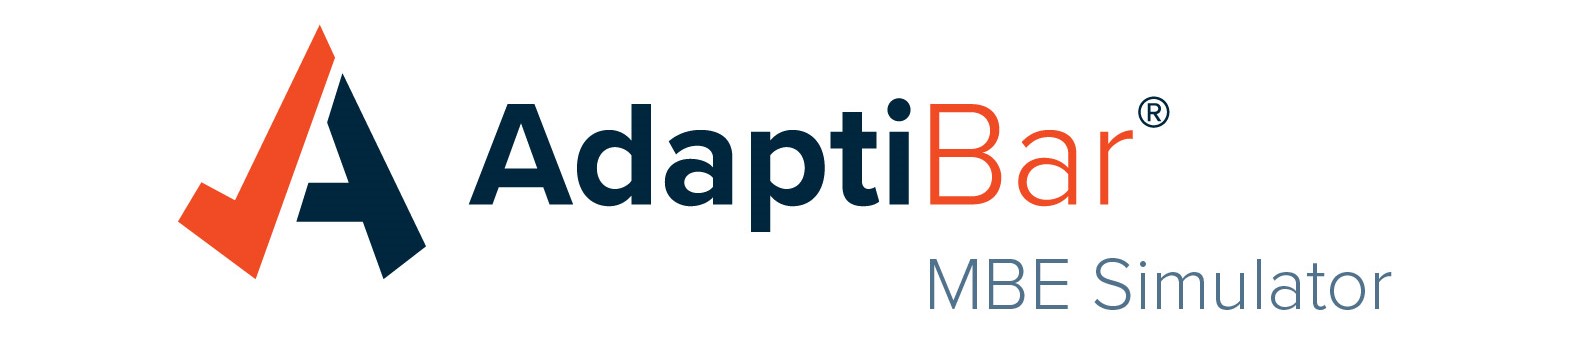 adaptibar logo